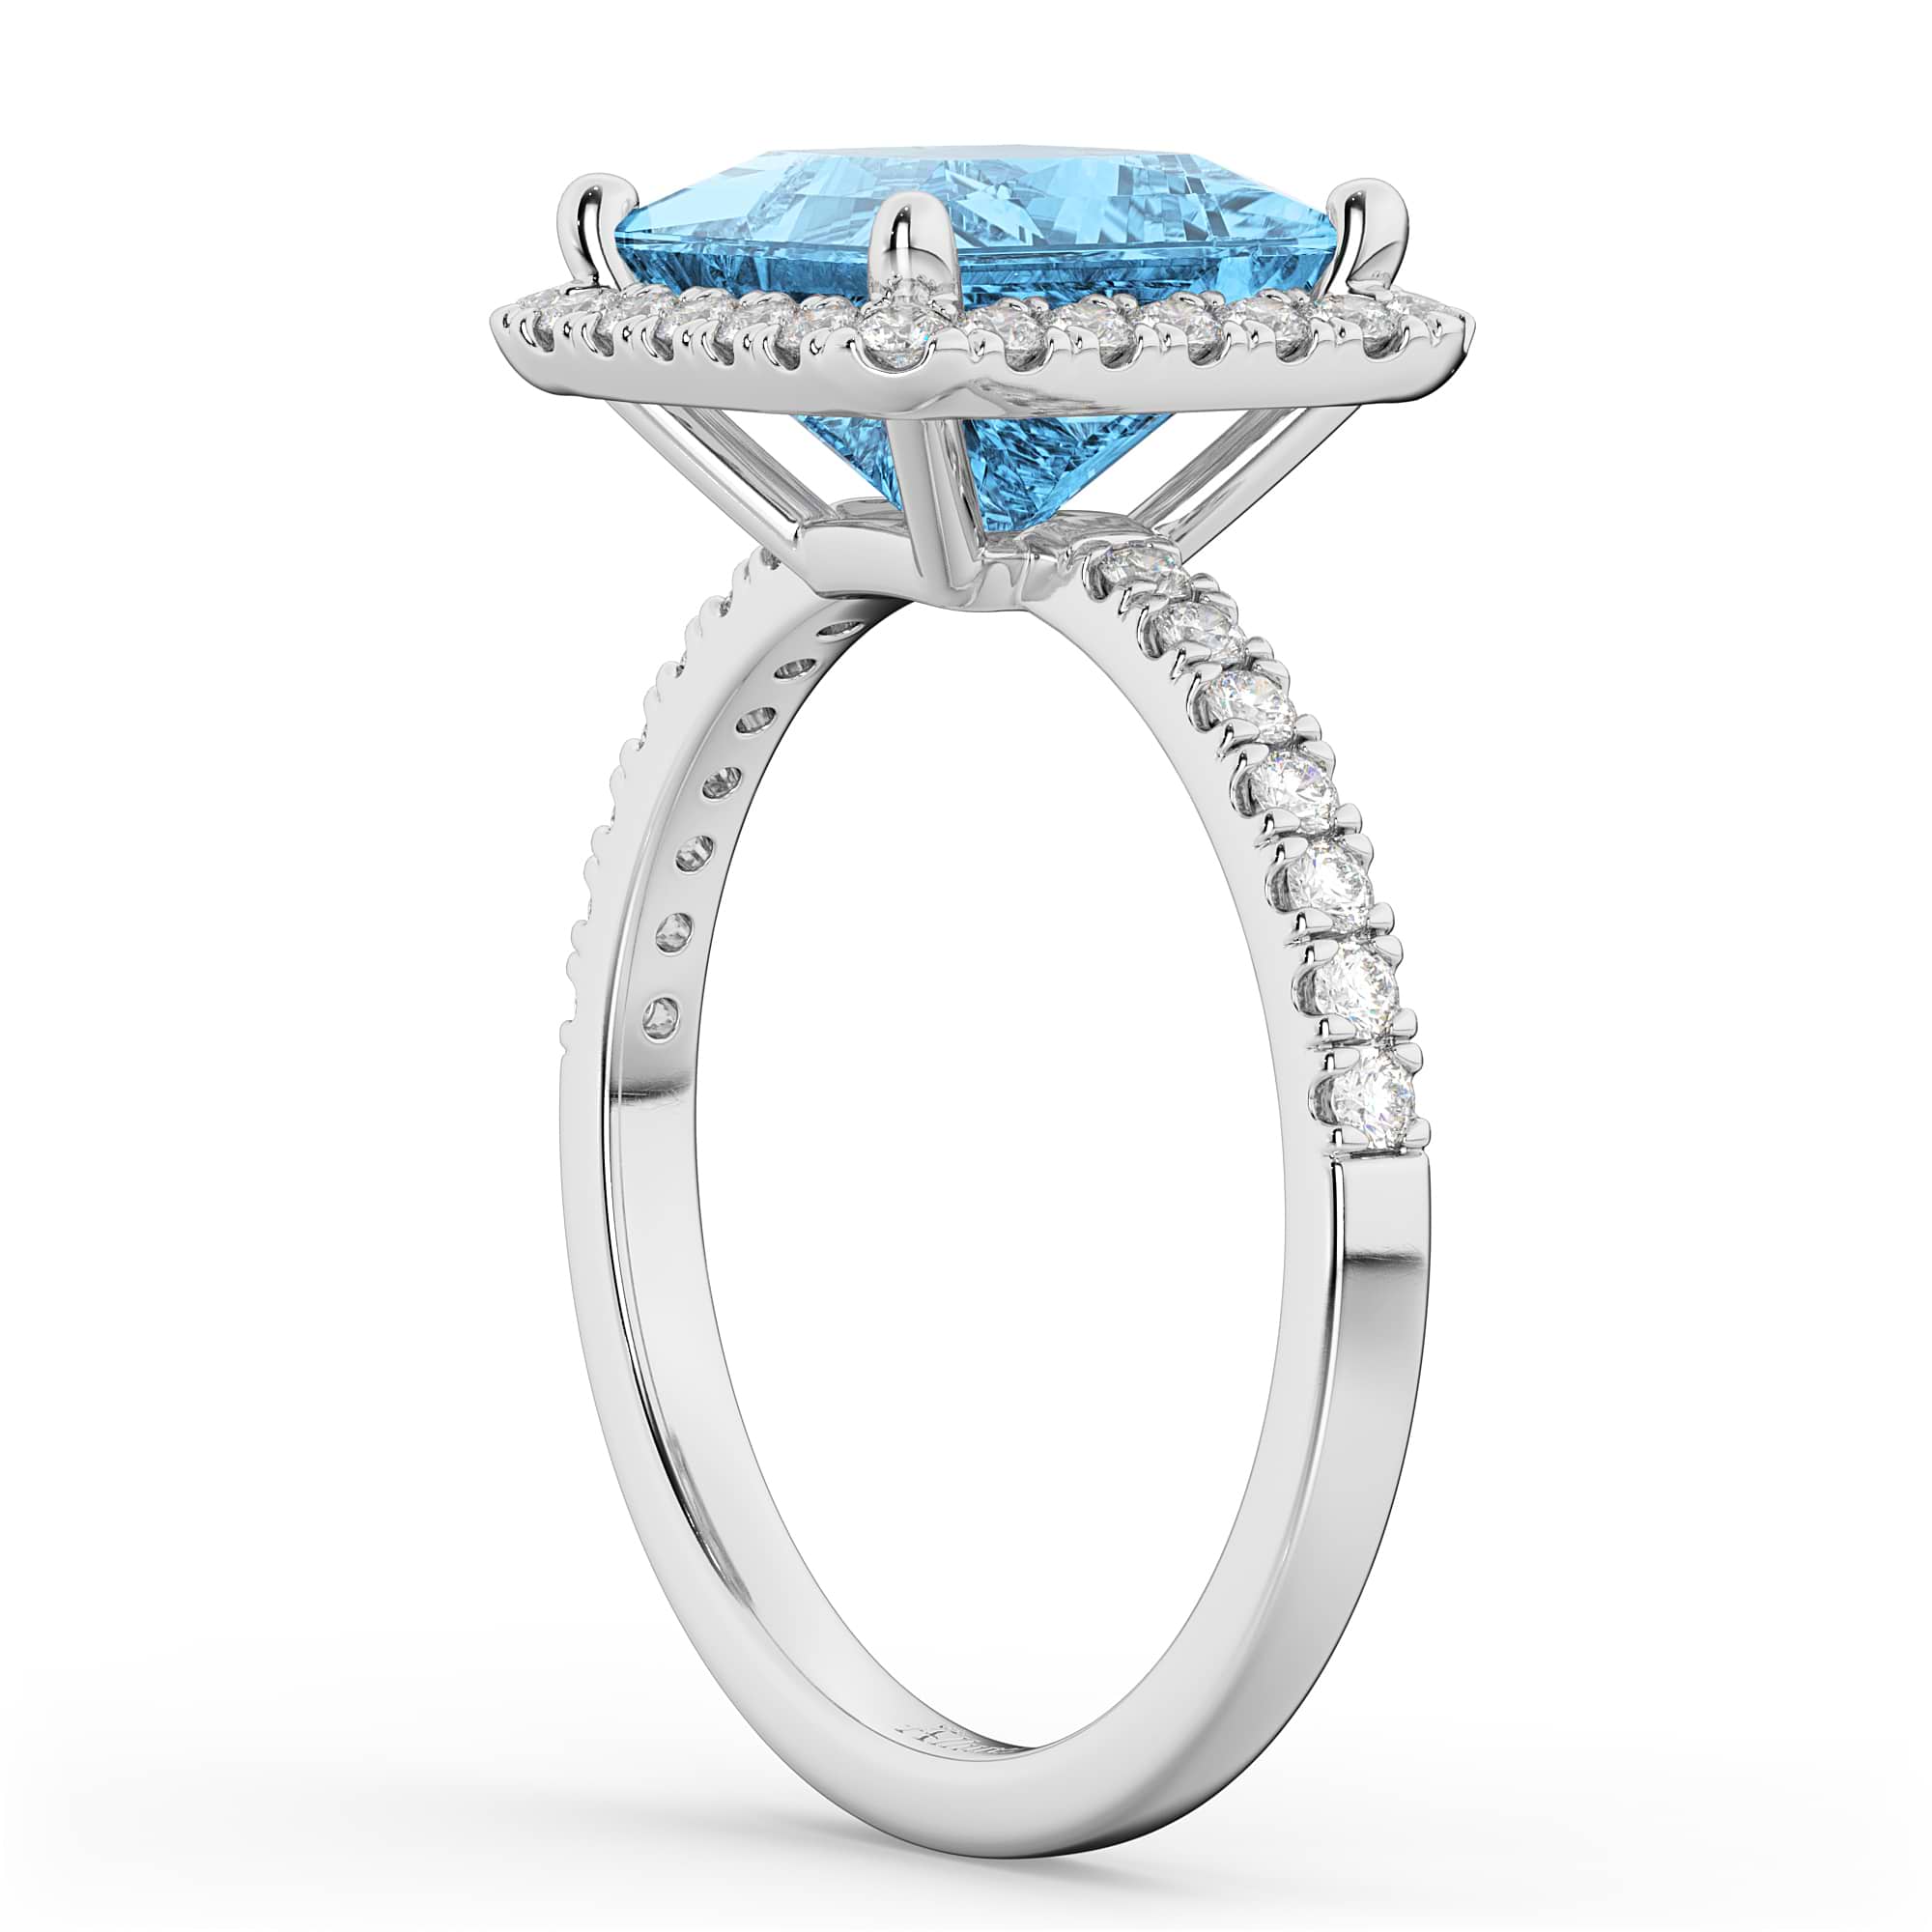 Princess Cut Halo Blue Topaz & Diamond Engagement Ring 14K White Gold 3.47ct